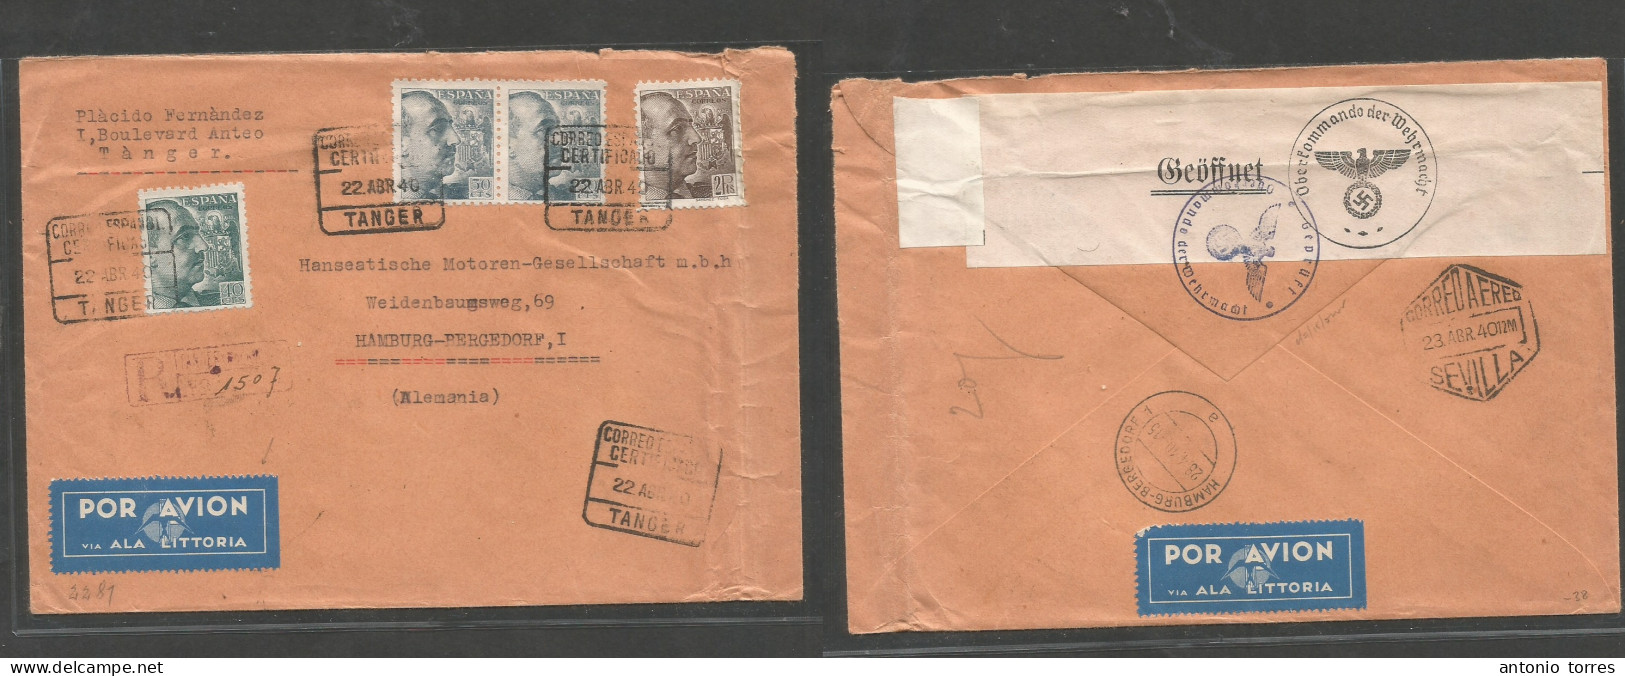 Marruecos. 1940 (22 April) Tanger, Oficina Española - Alemania, Hamburgo (28 April) Via Sevilla / Tablada Correo Aereo. - Morocco (1956-...)